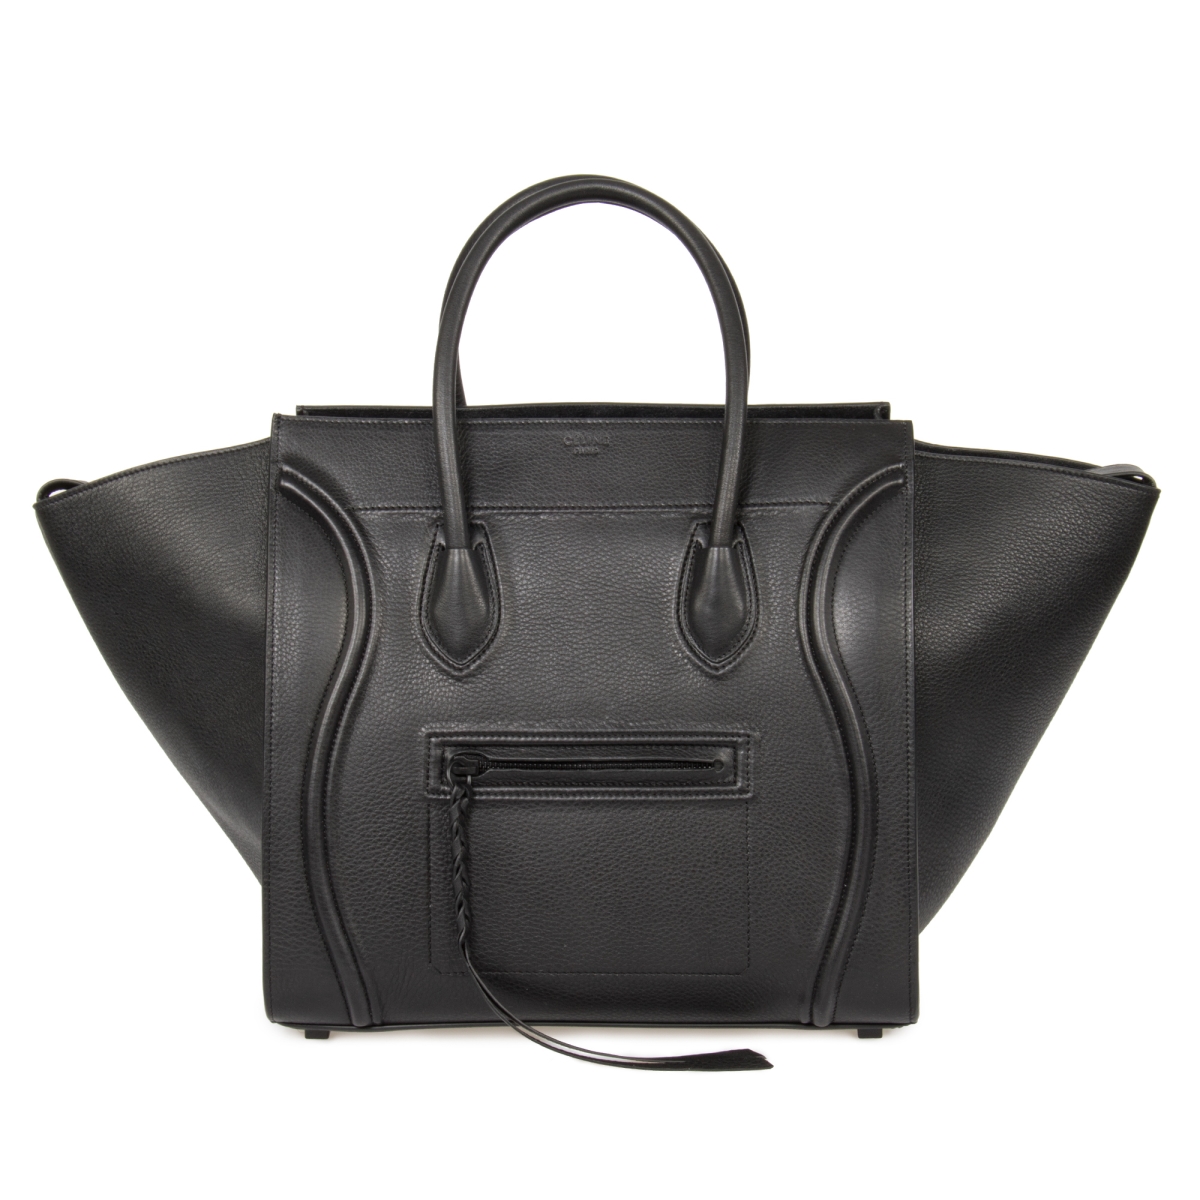 Cel-hbag-phant-grain-blk-m Medium Luggage Phantom Bag, Black Leather